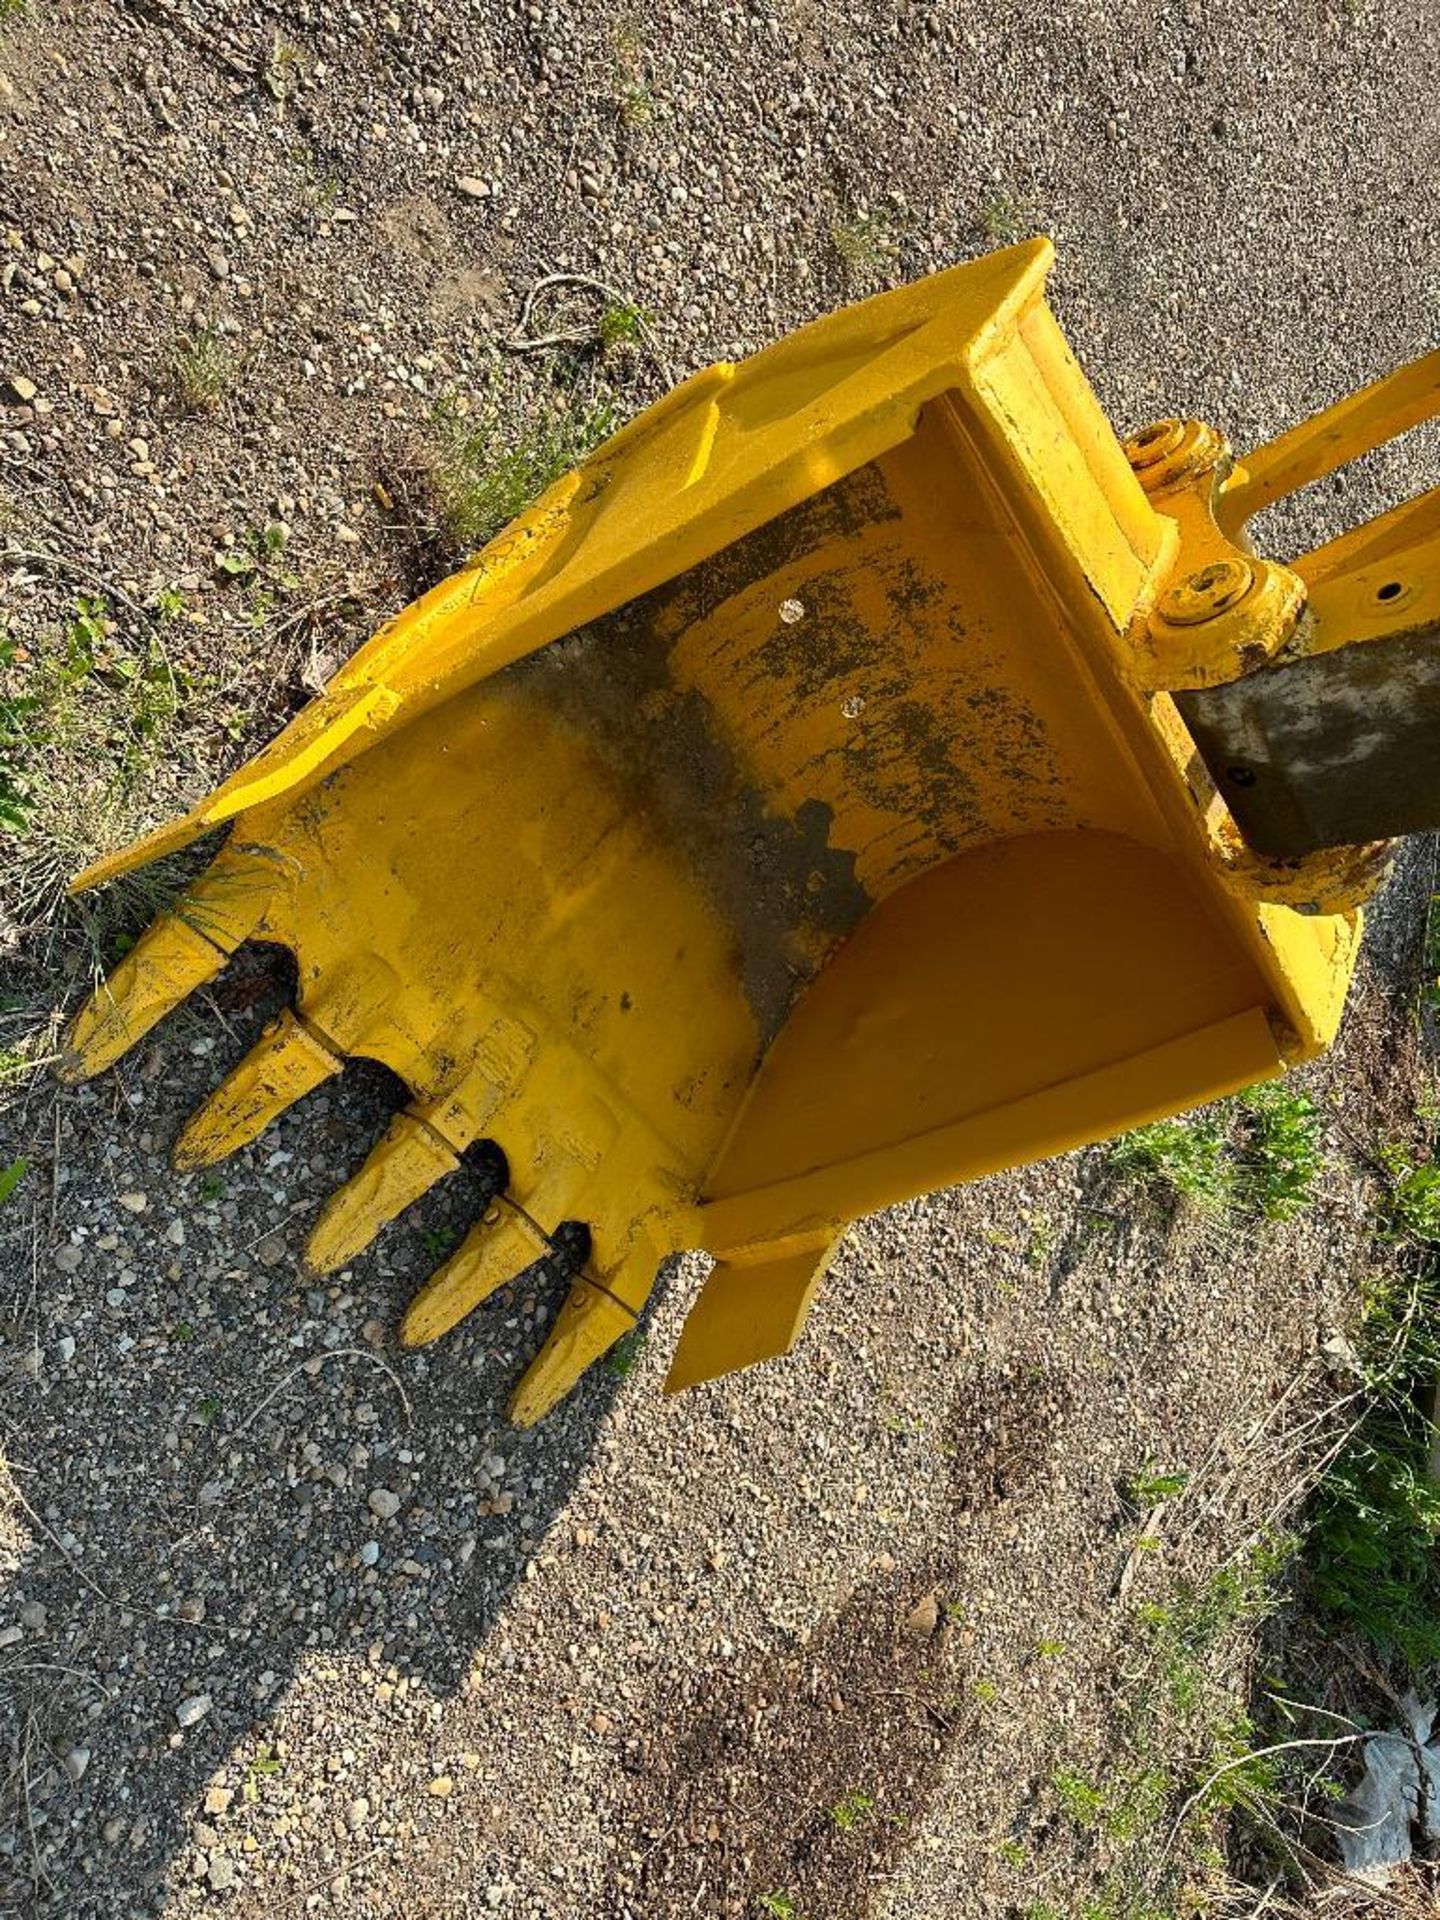 2012 Komatsu PC70-8 Compact Hydraulic Excavator w/ 32“ Dig Bucket, 3,820hrs Showing, VIN: KMTPC238C3 - Image 8 of 13